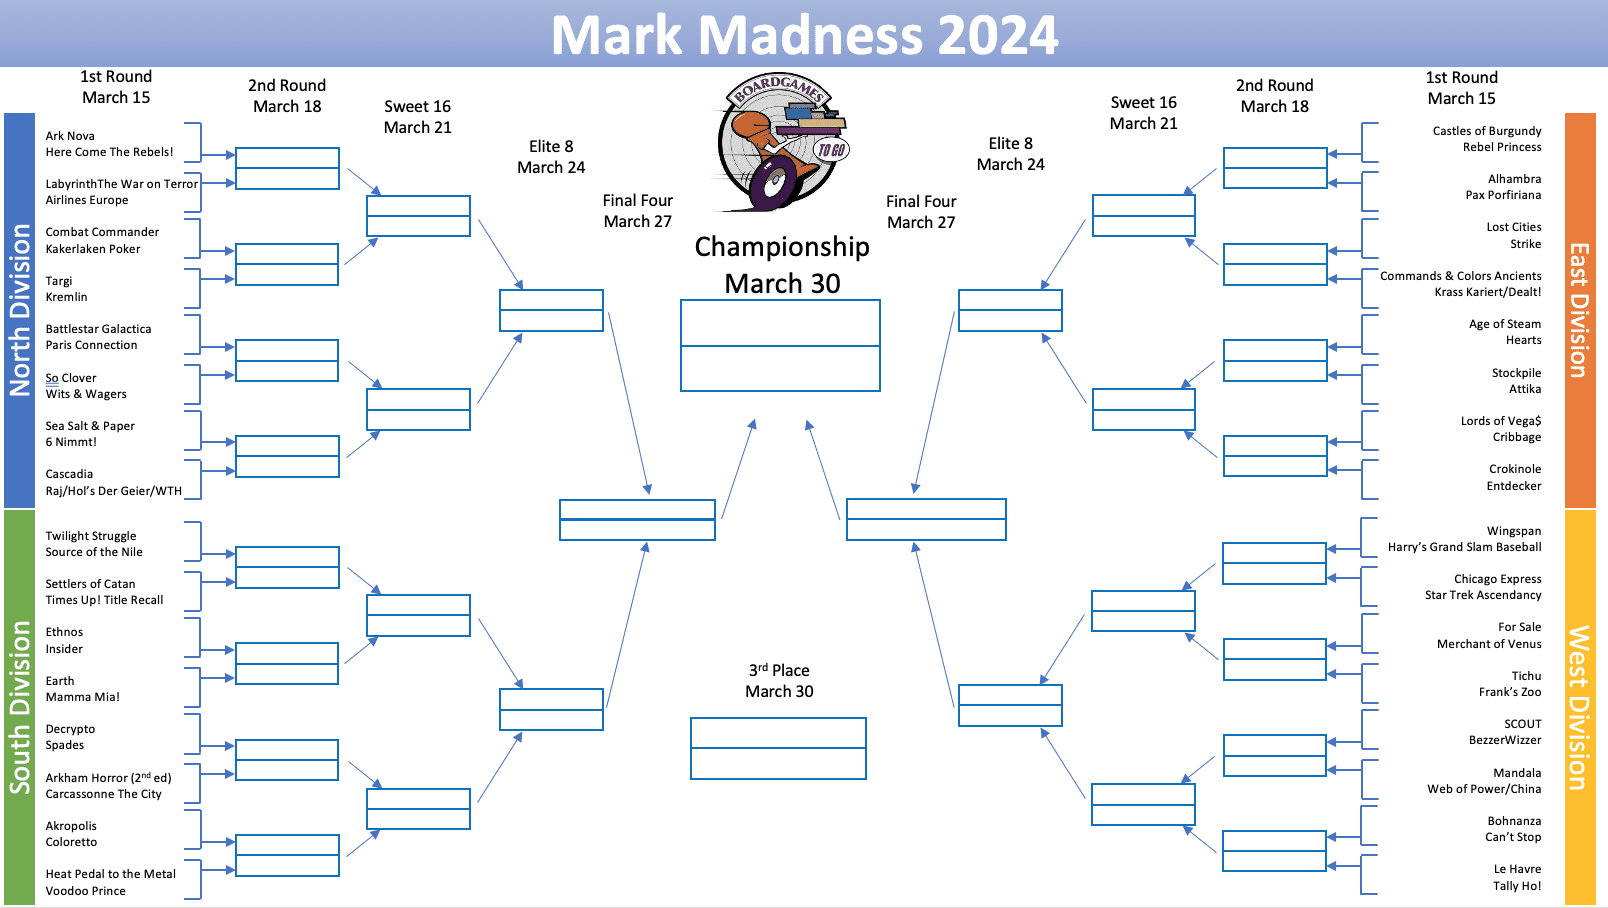 Mark Madness 2024